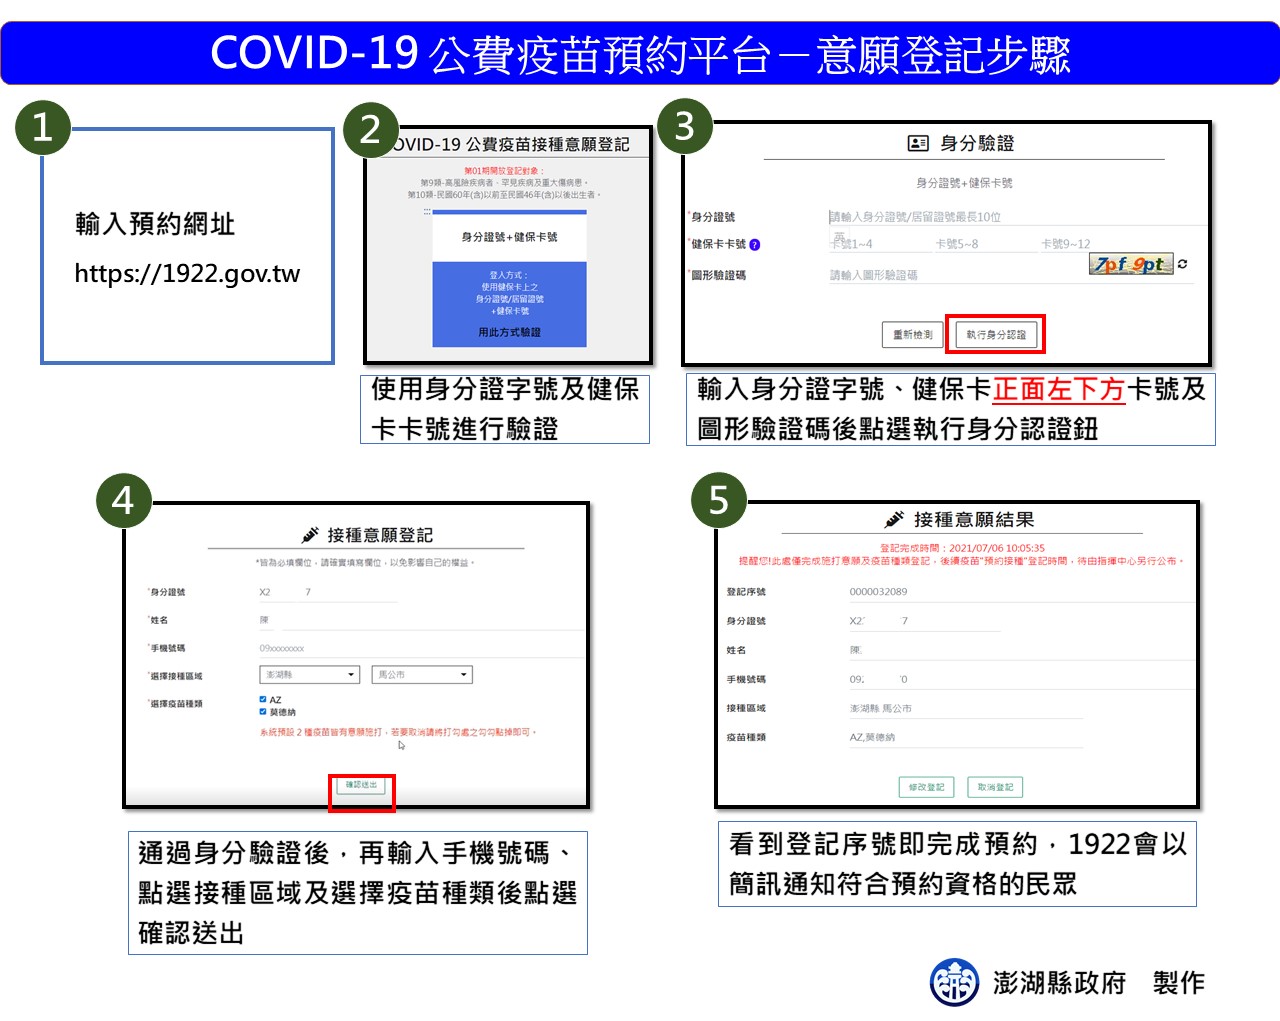 COVID-19公費疫苗預約平台-意願登記步驟